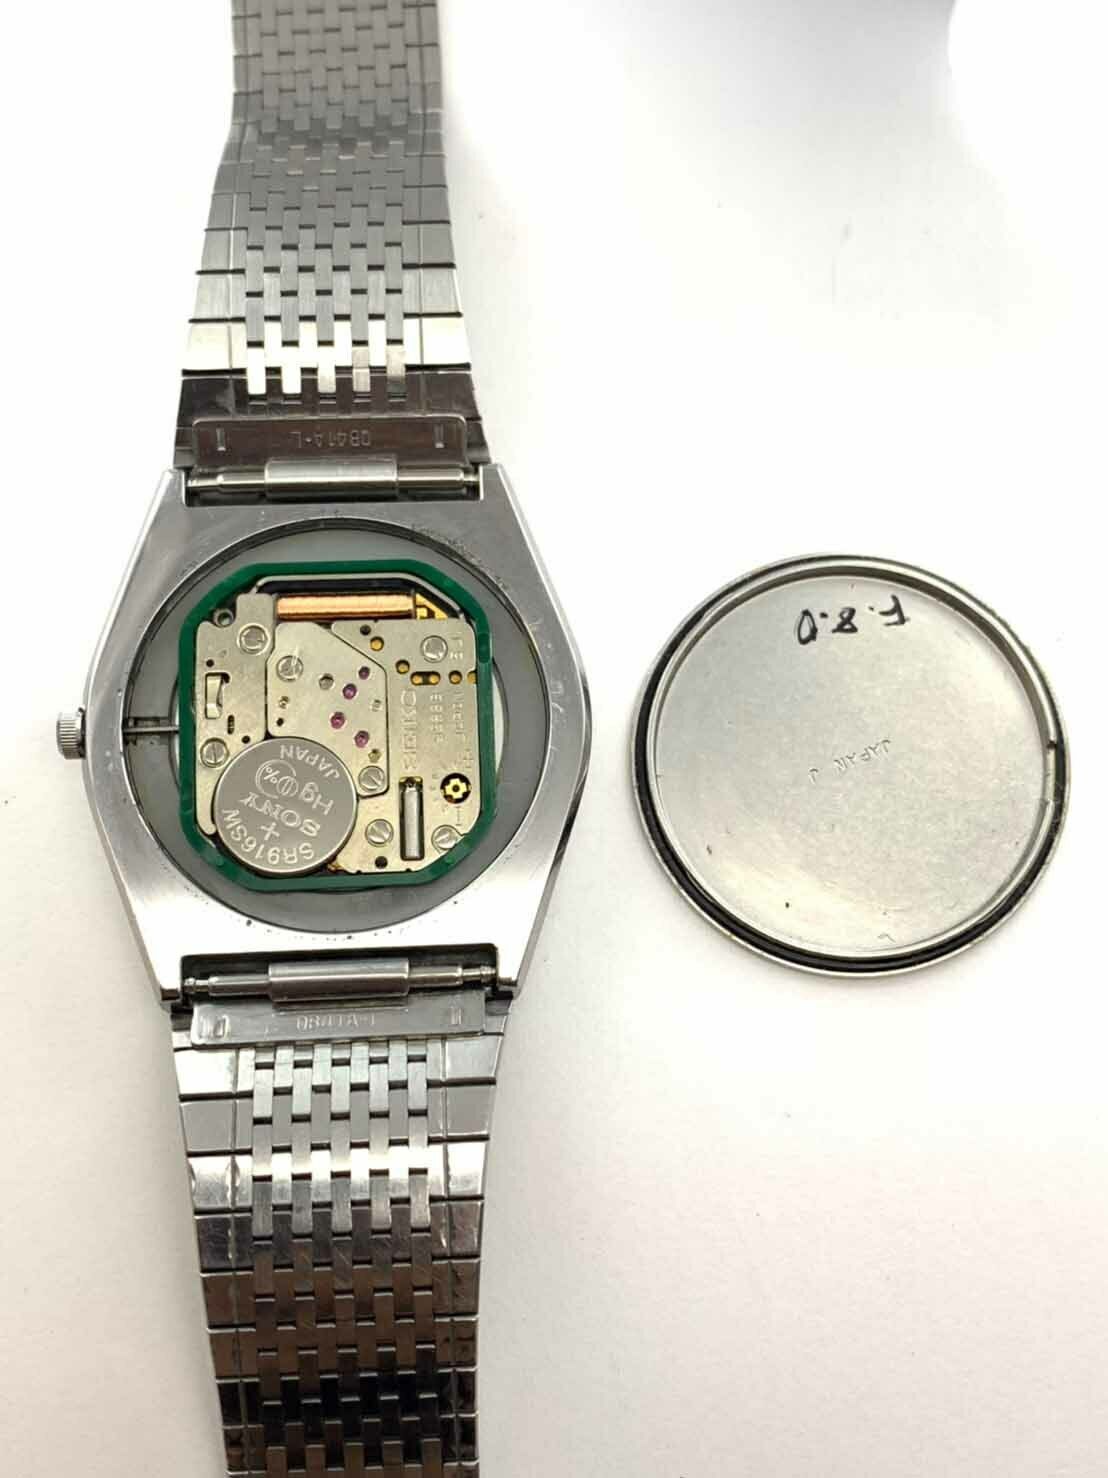 SEIKO MAJESTA 9533-6000 Quartz Wrist Watch Japan | WatchCharts